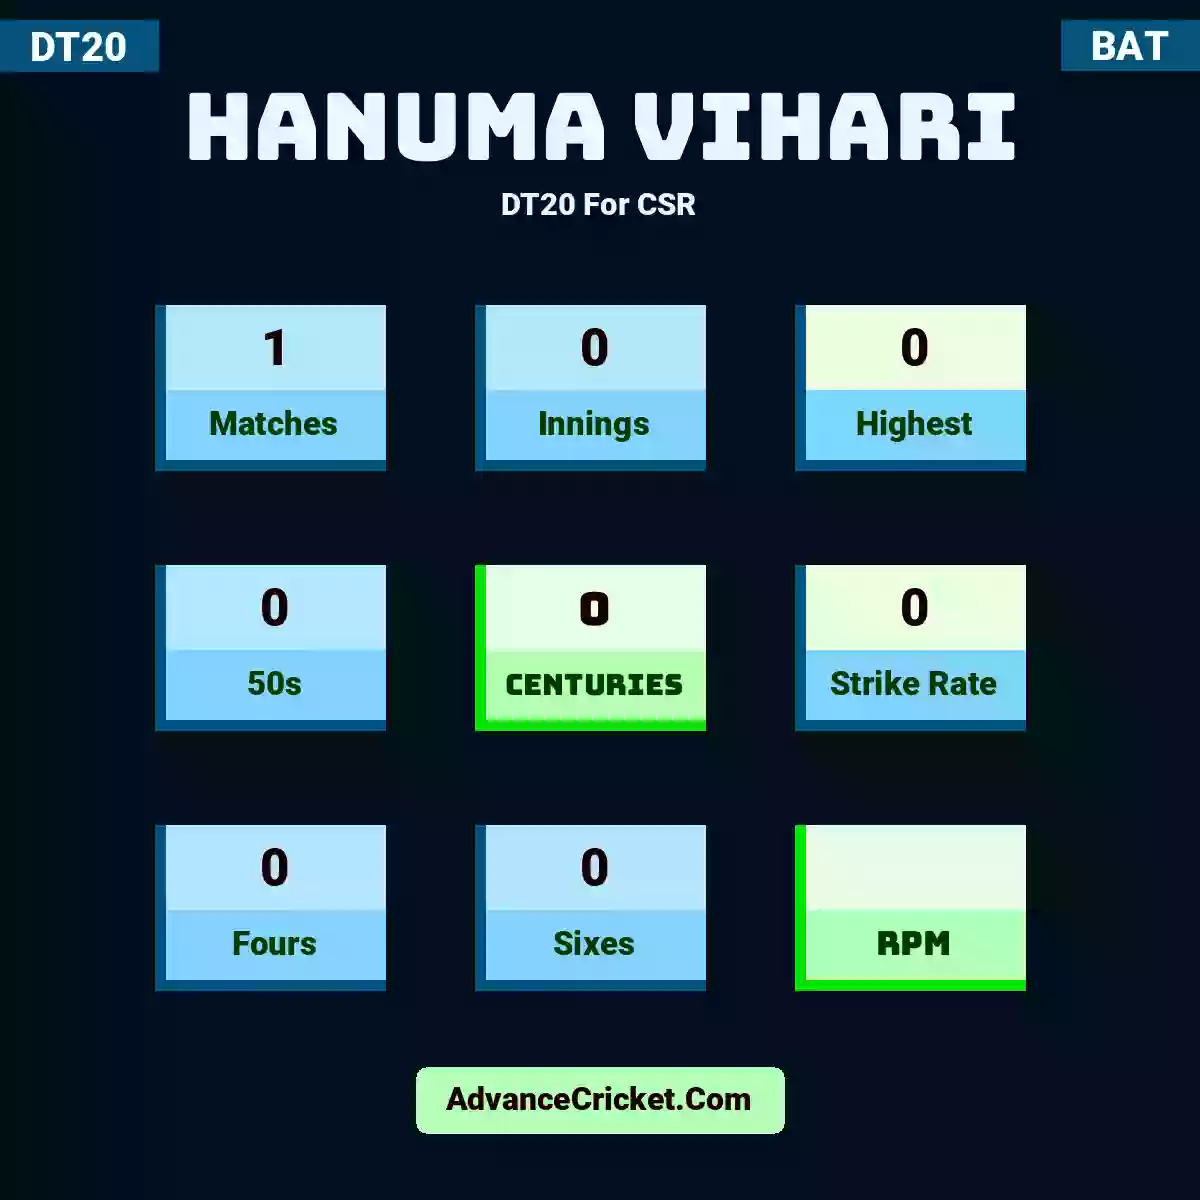 Hanuma Vihari DT20  For CSR, Hanuma Vihari played 1 matches, scored 0 runs as highest, 0 half-centuries, and 0 centuries, with a strike rate of 0. H.Vihari hit 0 fours and 0 sixes.